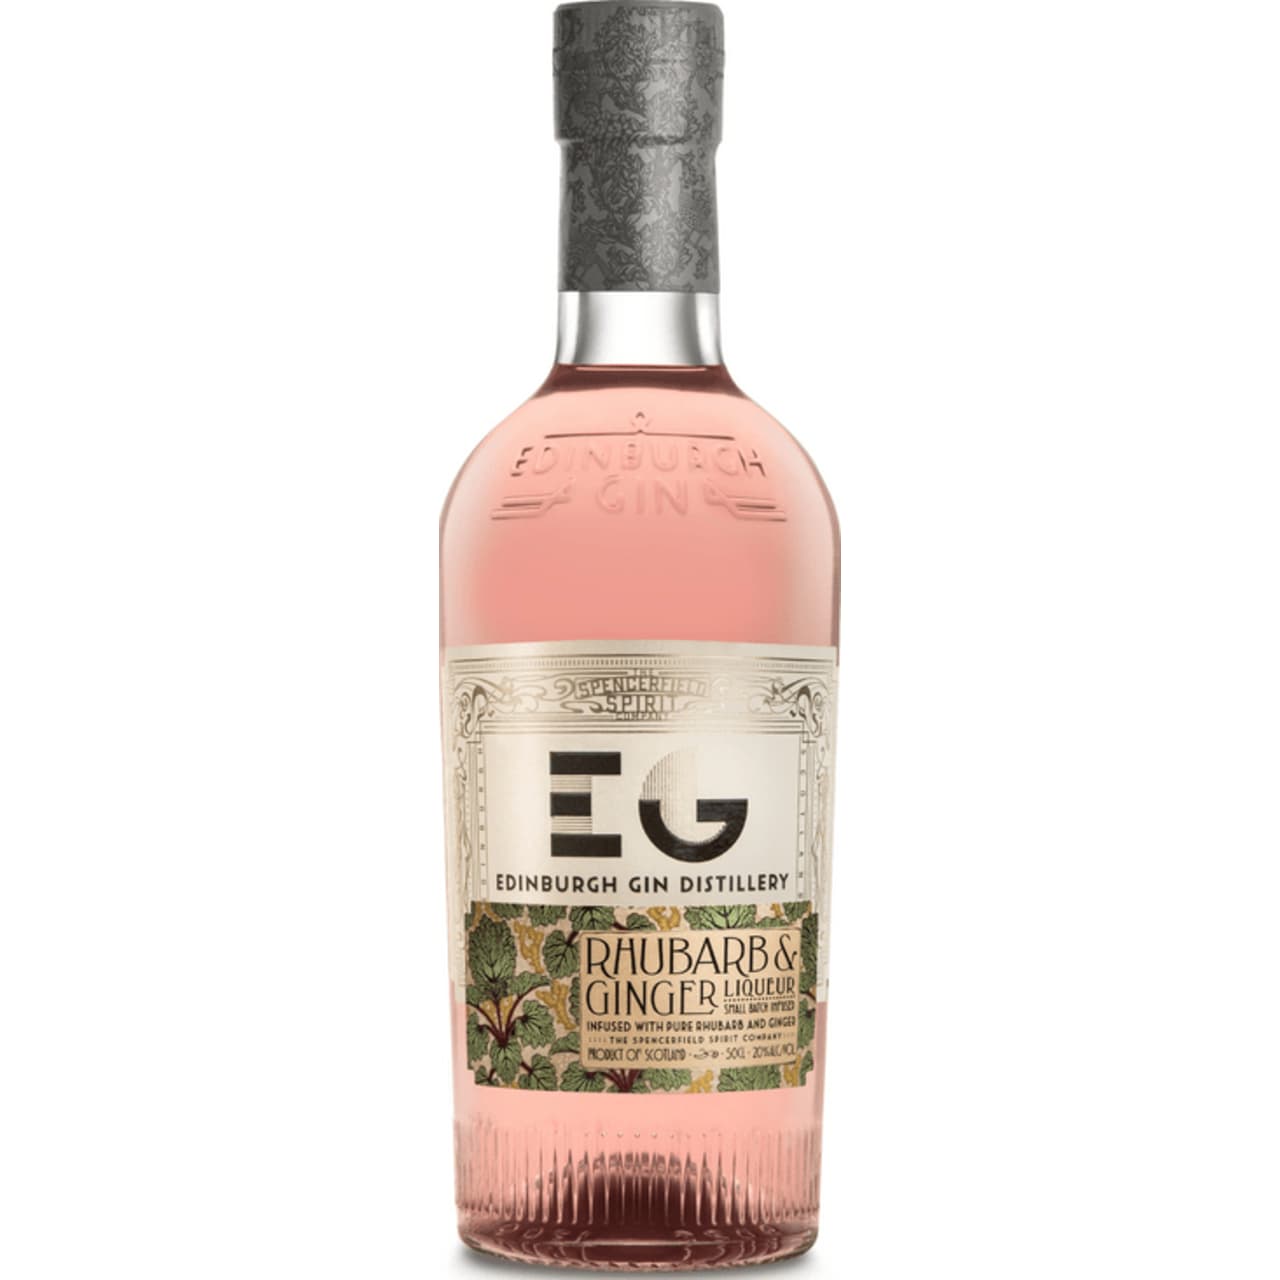 Product Image - Edinburgh Gin Rhubarb & Ginger Liqueur